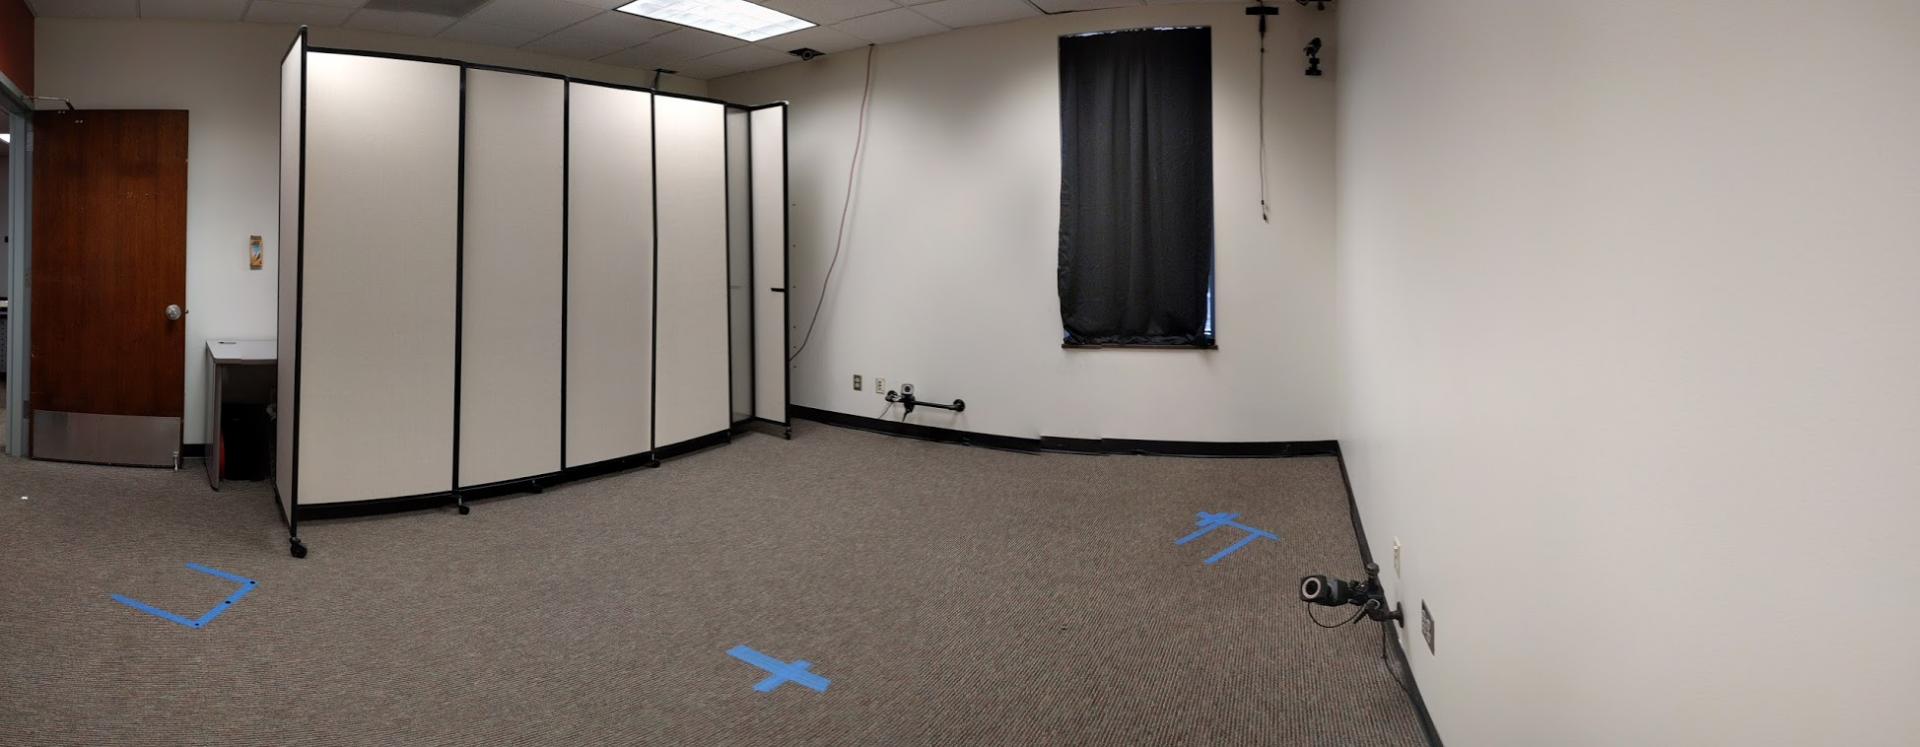 Nimbus lab interior-room UAV testing area